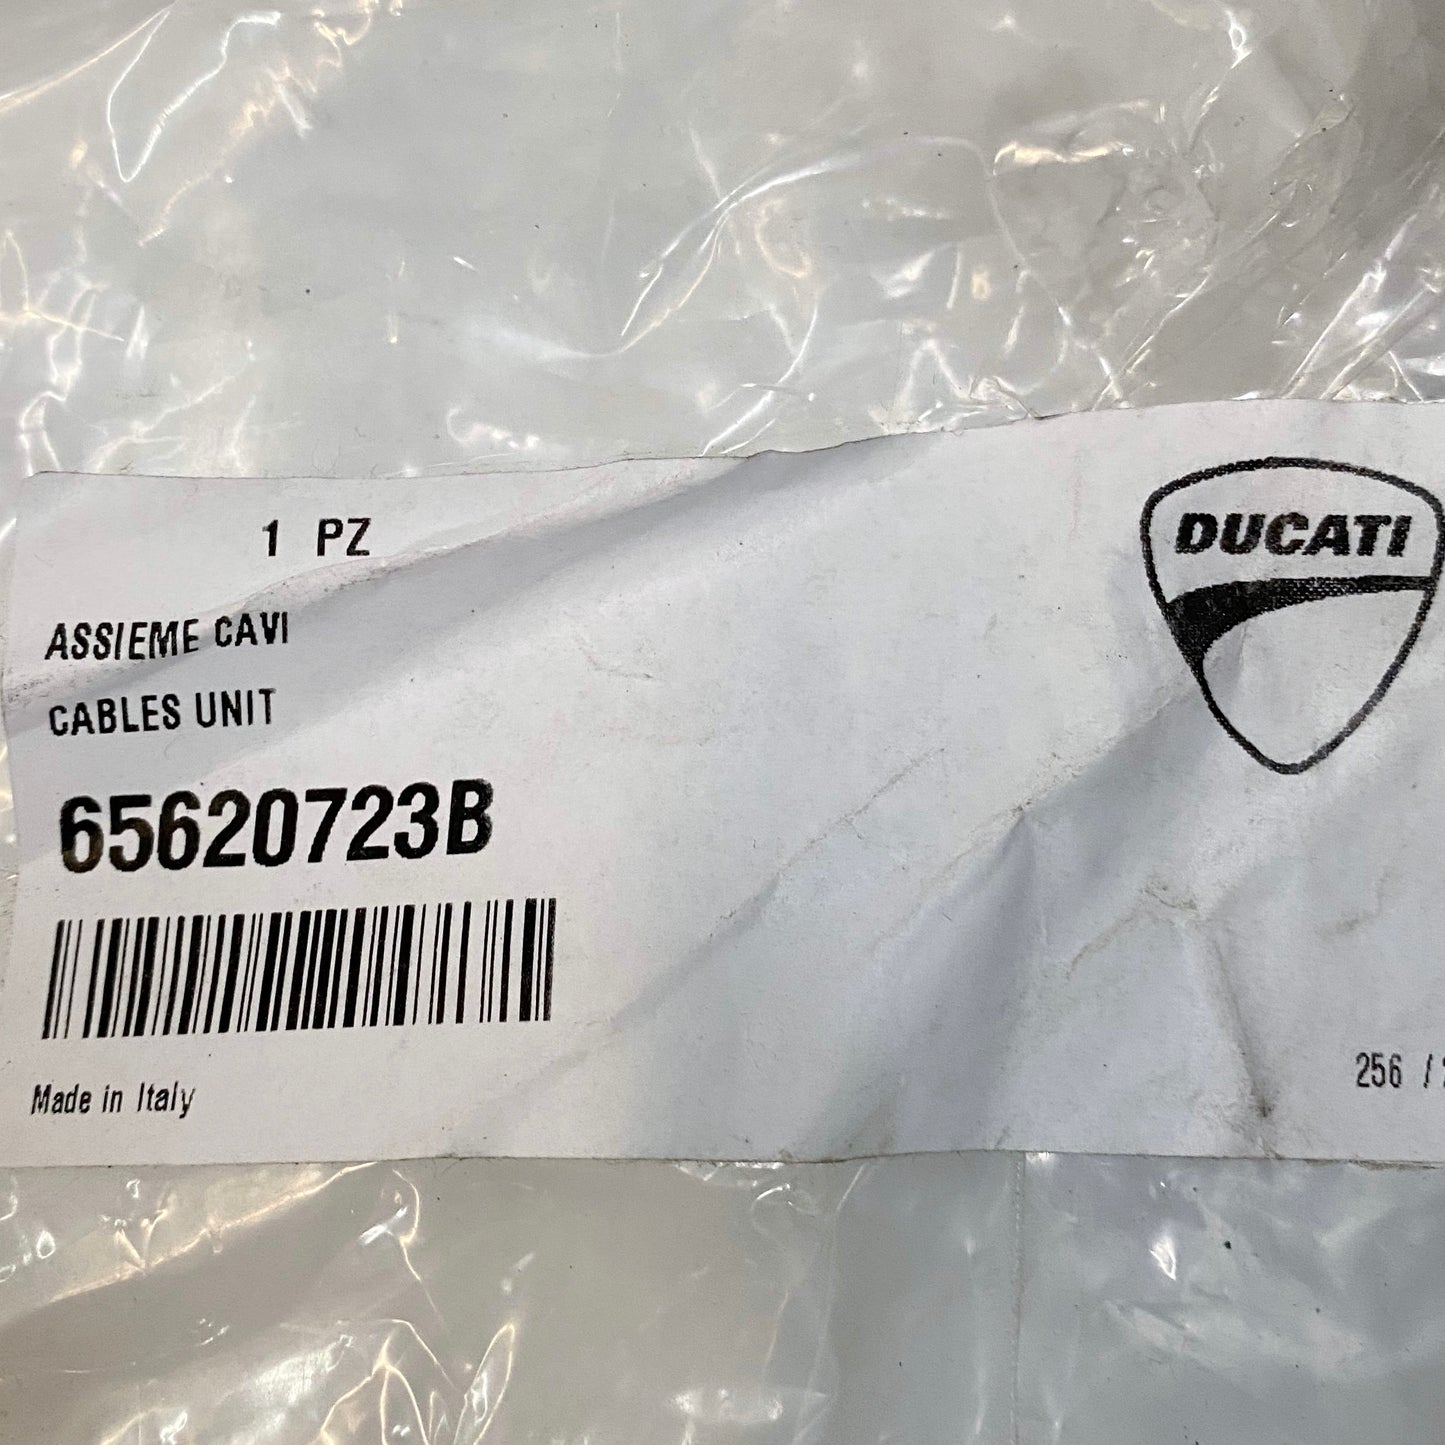 Ducati OEM Cables Unit MTS1200 65620723B